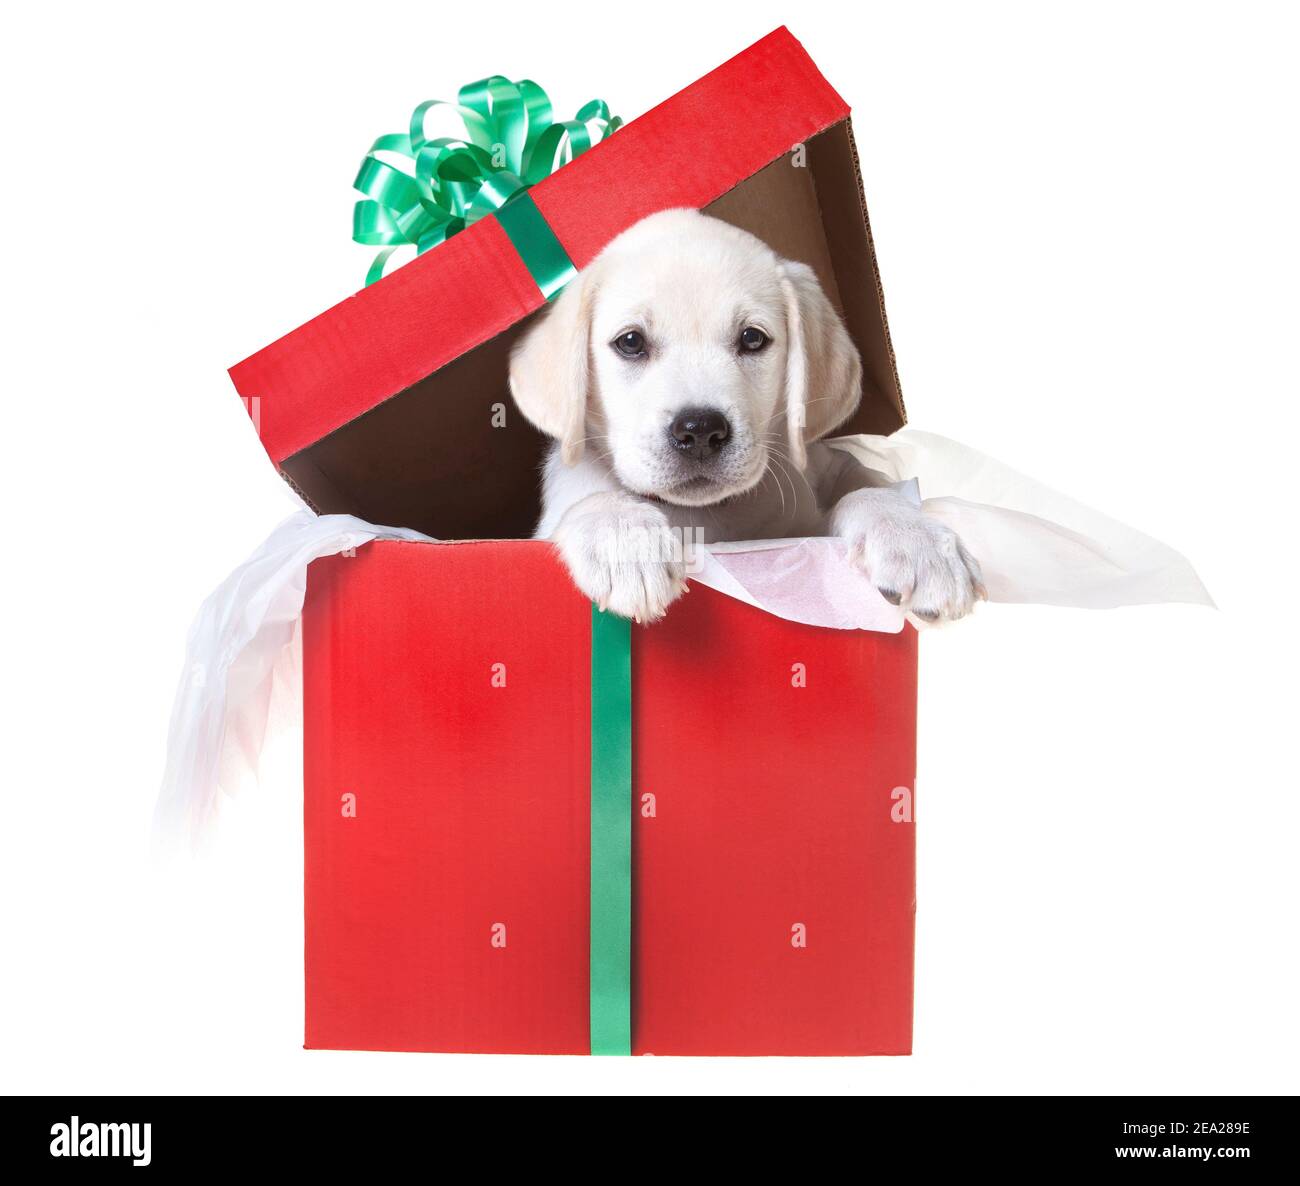 https://c8.alamy.com/comp/2EA289E/an-adorable-yellow-lab-puppy-in-a-gift-box-for-christmas-2EA289E.jpg